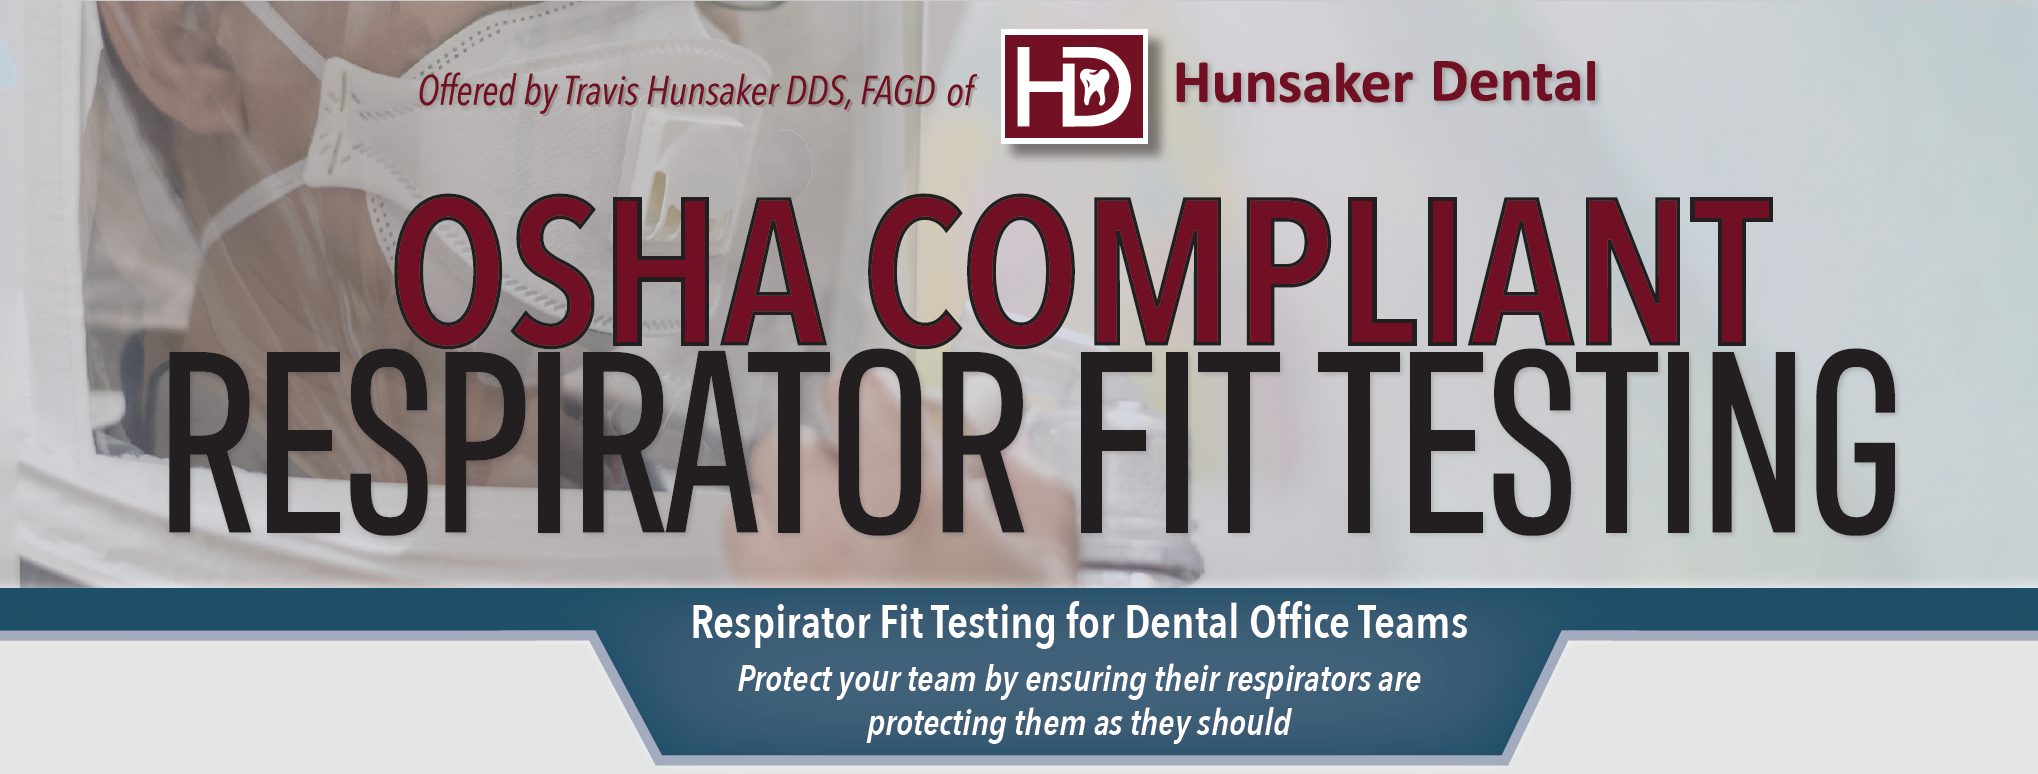 OSHA Compliant Respiratory Fit Testing